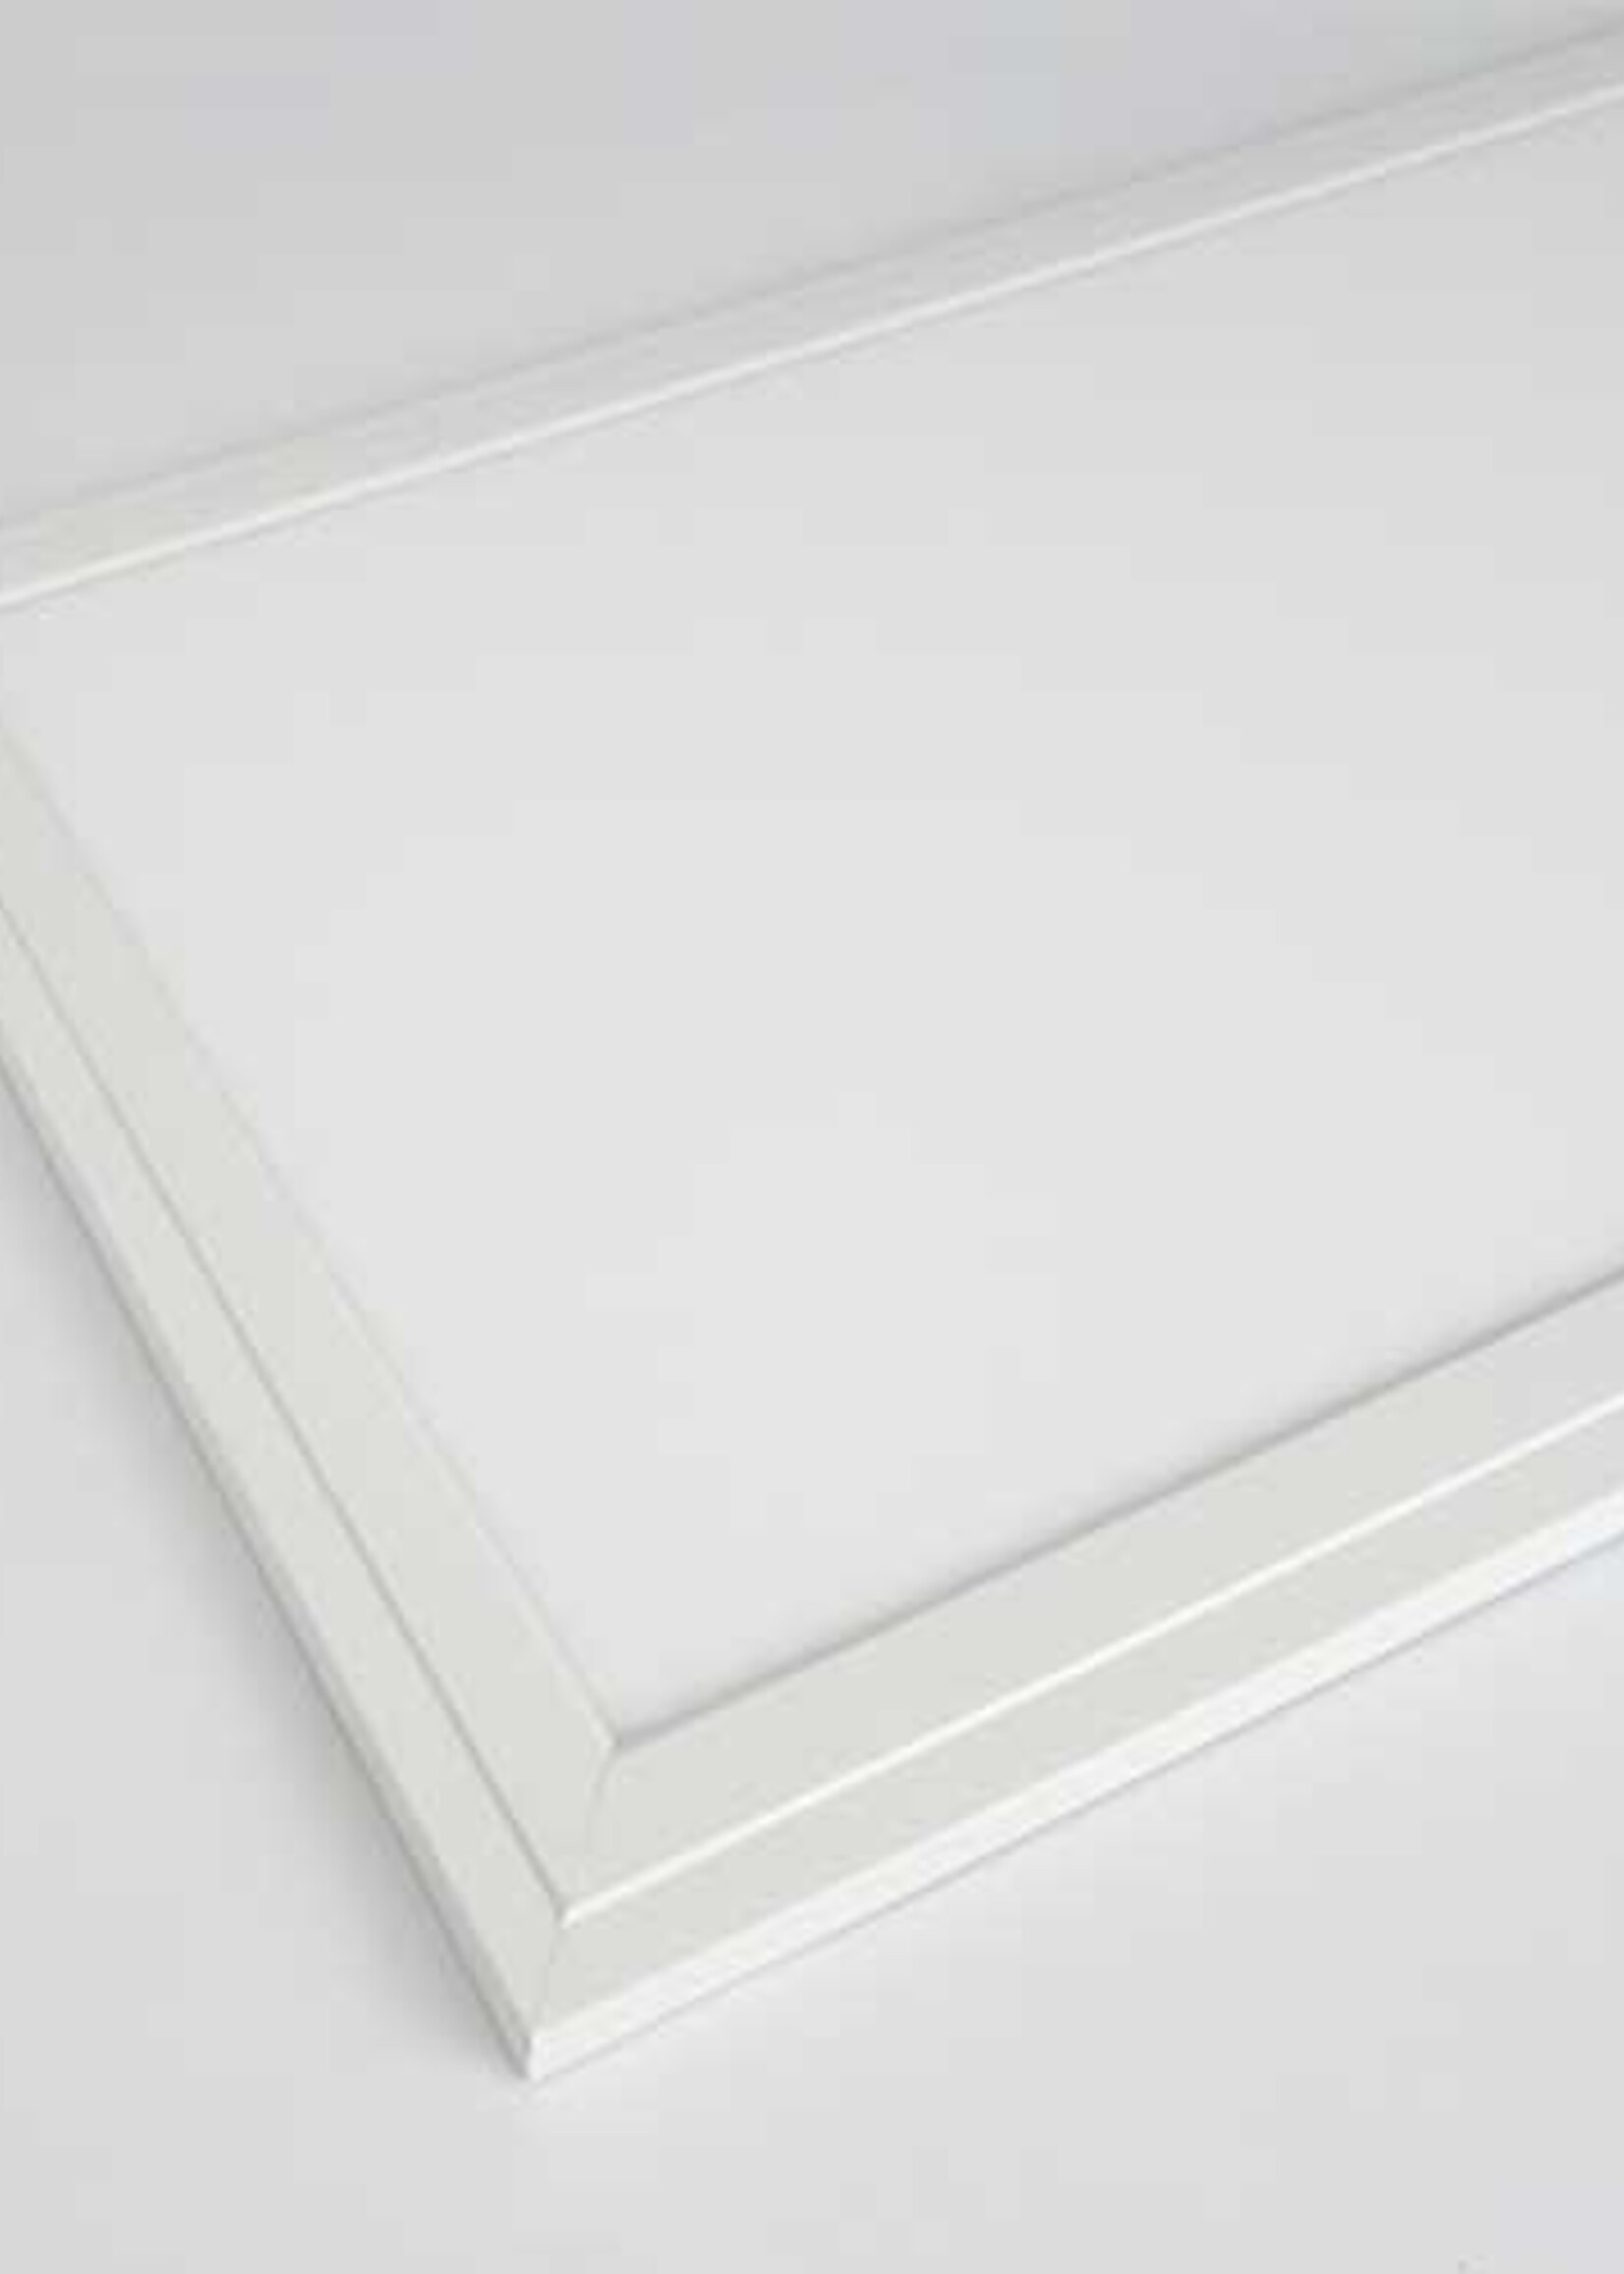 LEDWINKEL-Online LED Panel 30x120cm 36W 110lm/W Back-lit